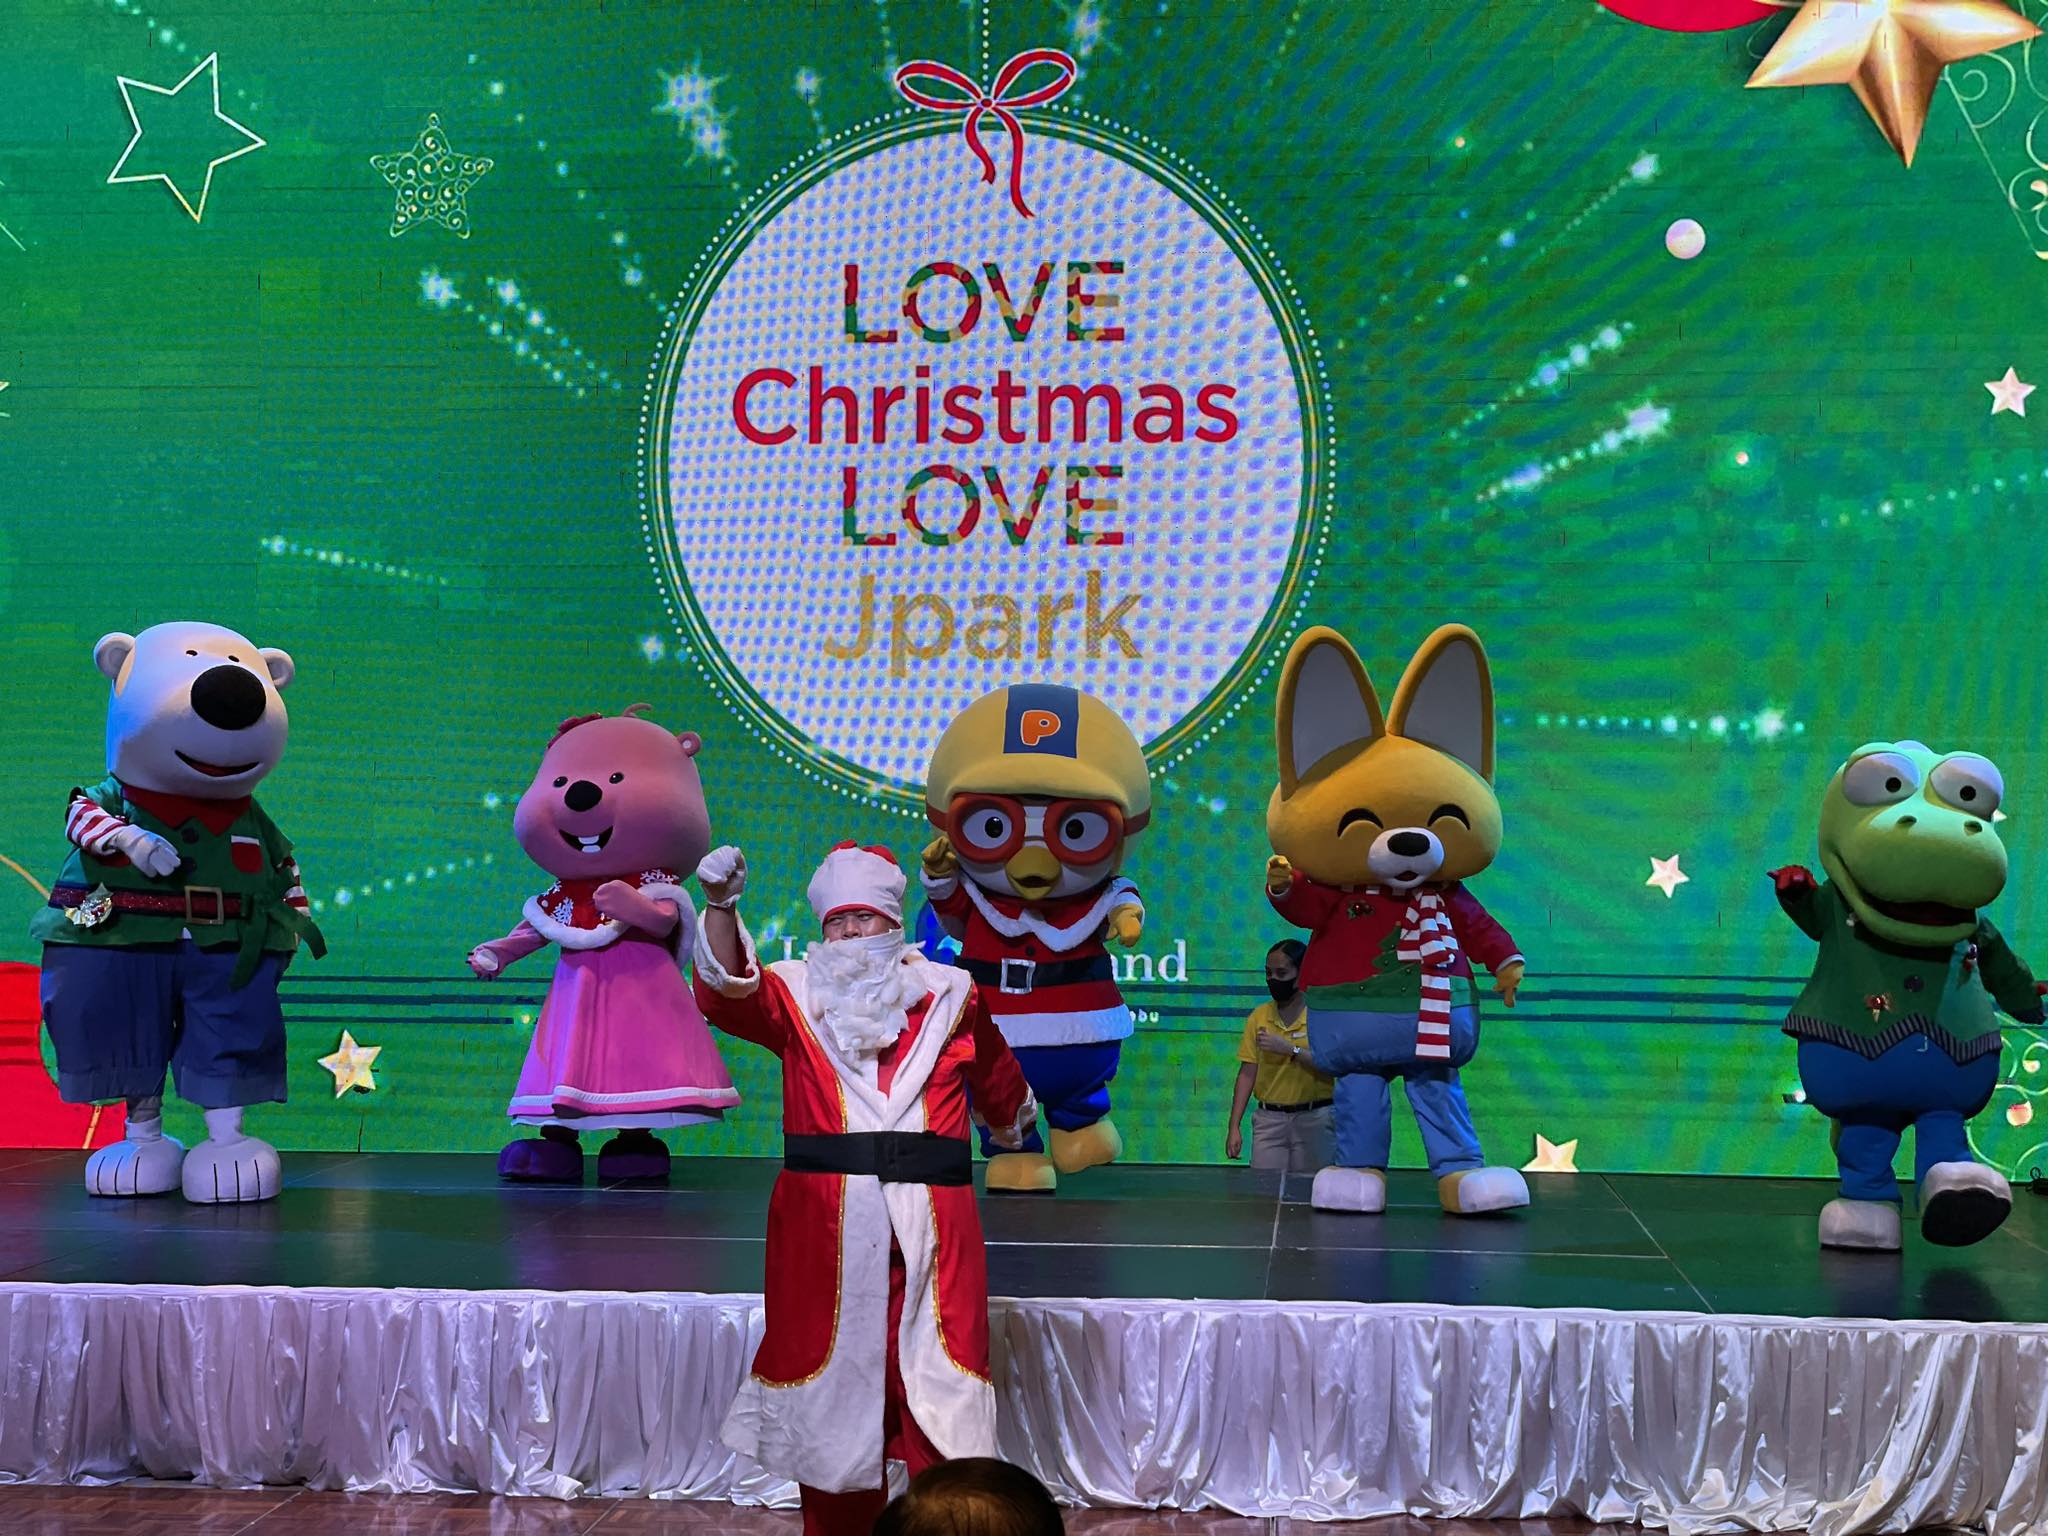 Celebrating the Season of Joy at JPark Island Resort & Waterpark Cebu: A Dazzling Christmas Tree Lighting Event